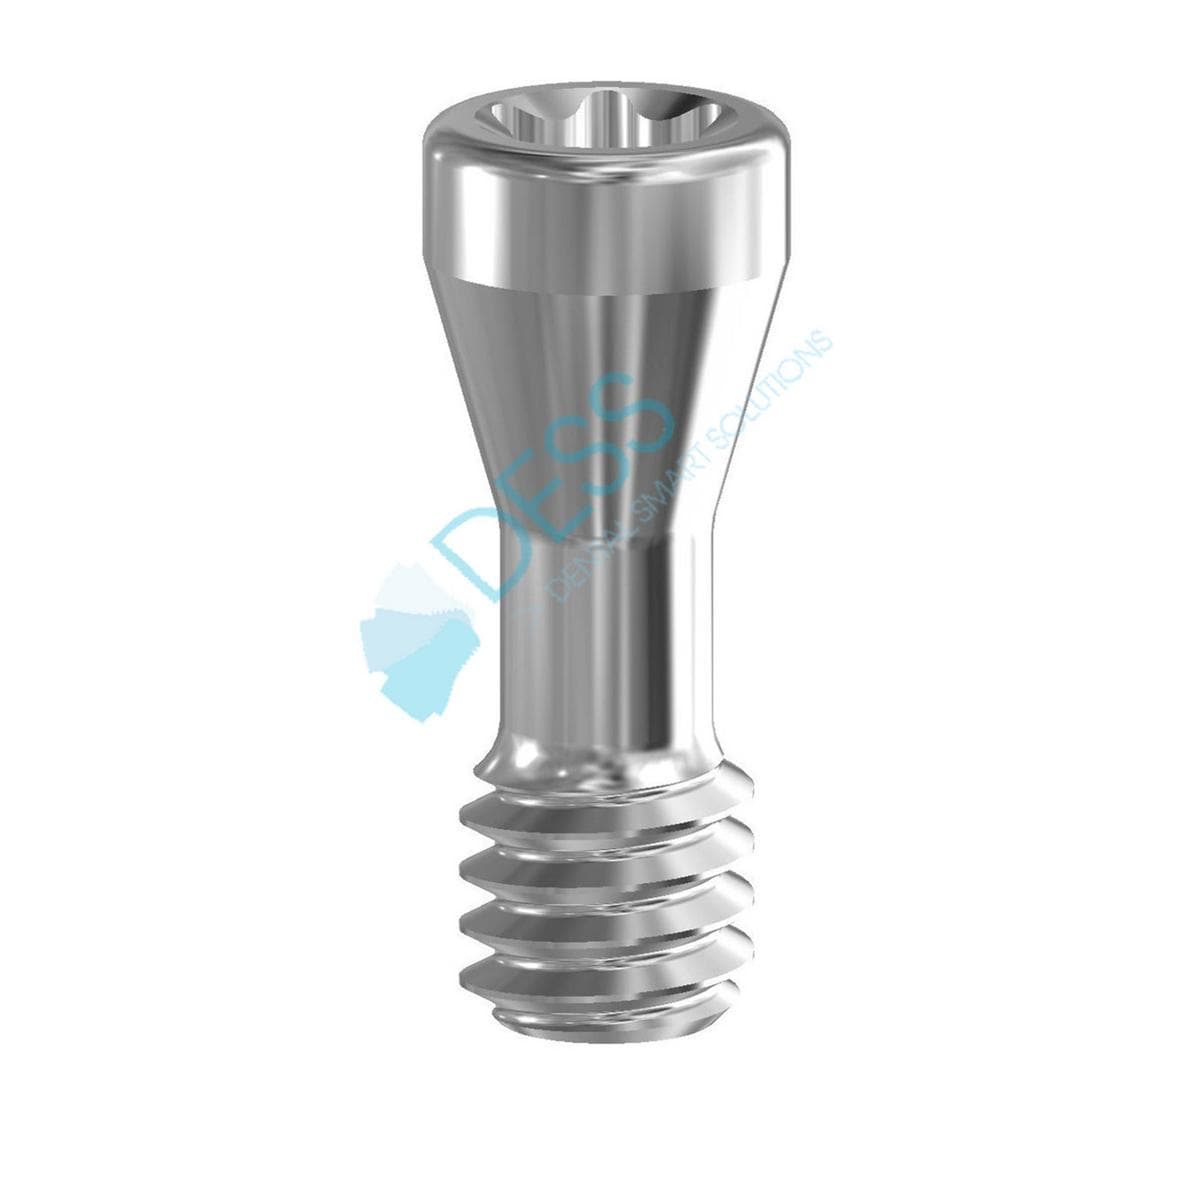 Abutmentschraube Torx® auf Implantat - kompatibel mit Straumann® - RN Ø 4,8 mm / WN Ø 6,5 mm, Standard, Packung 10 Stück